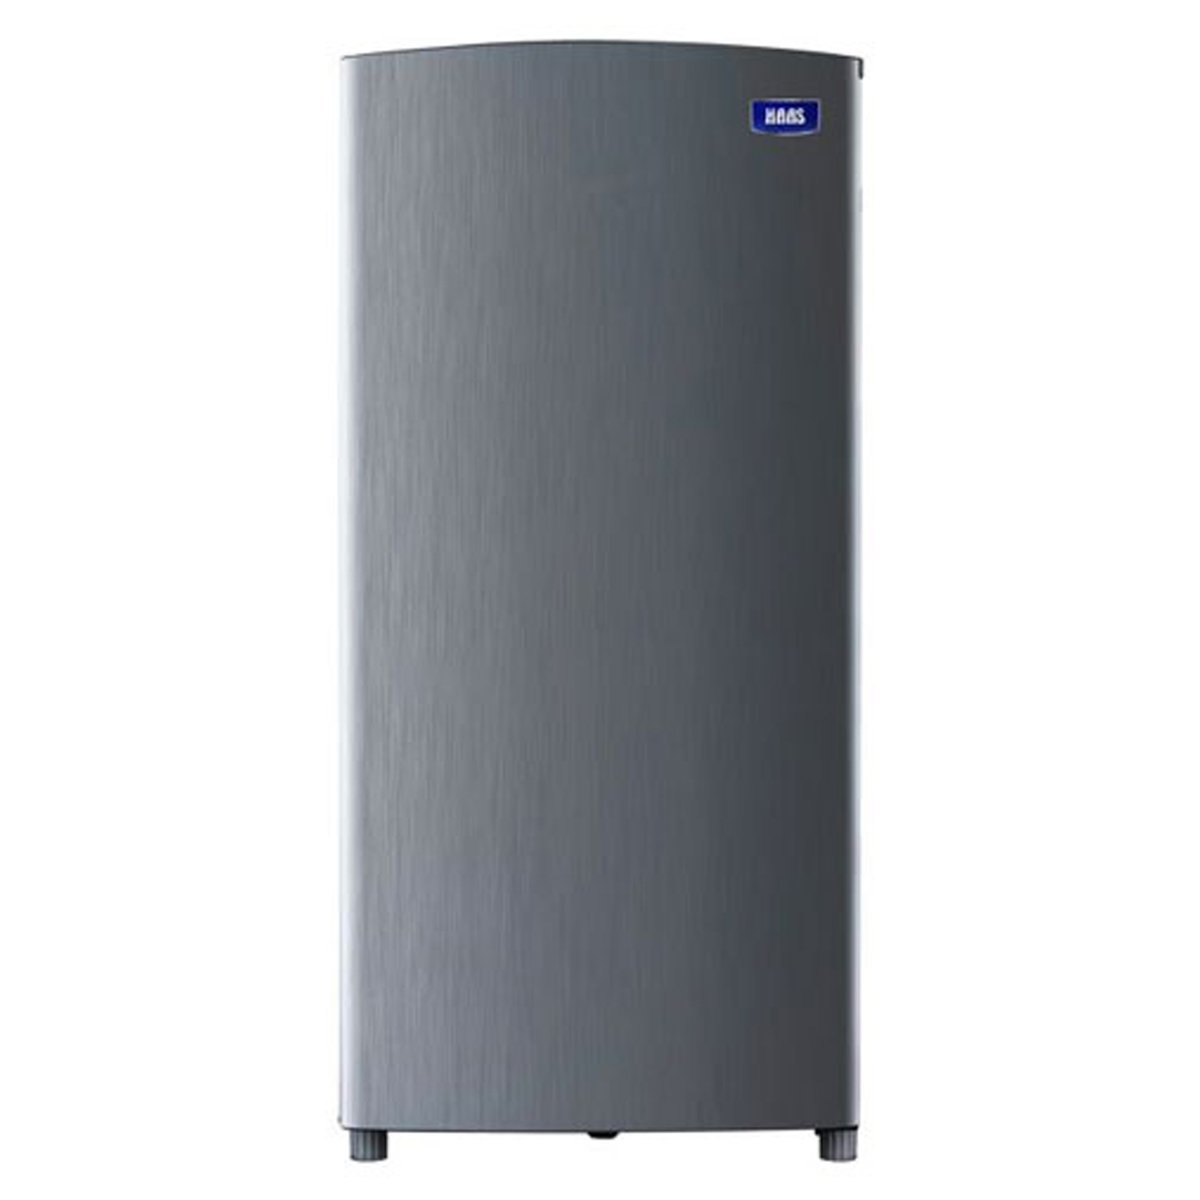 Haas Refrigerator HRK107S 149Ltr